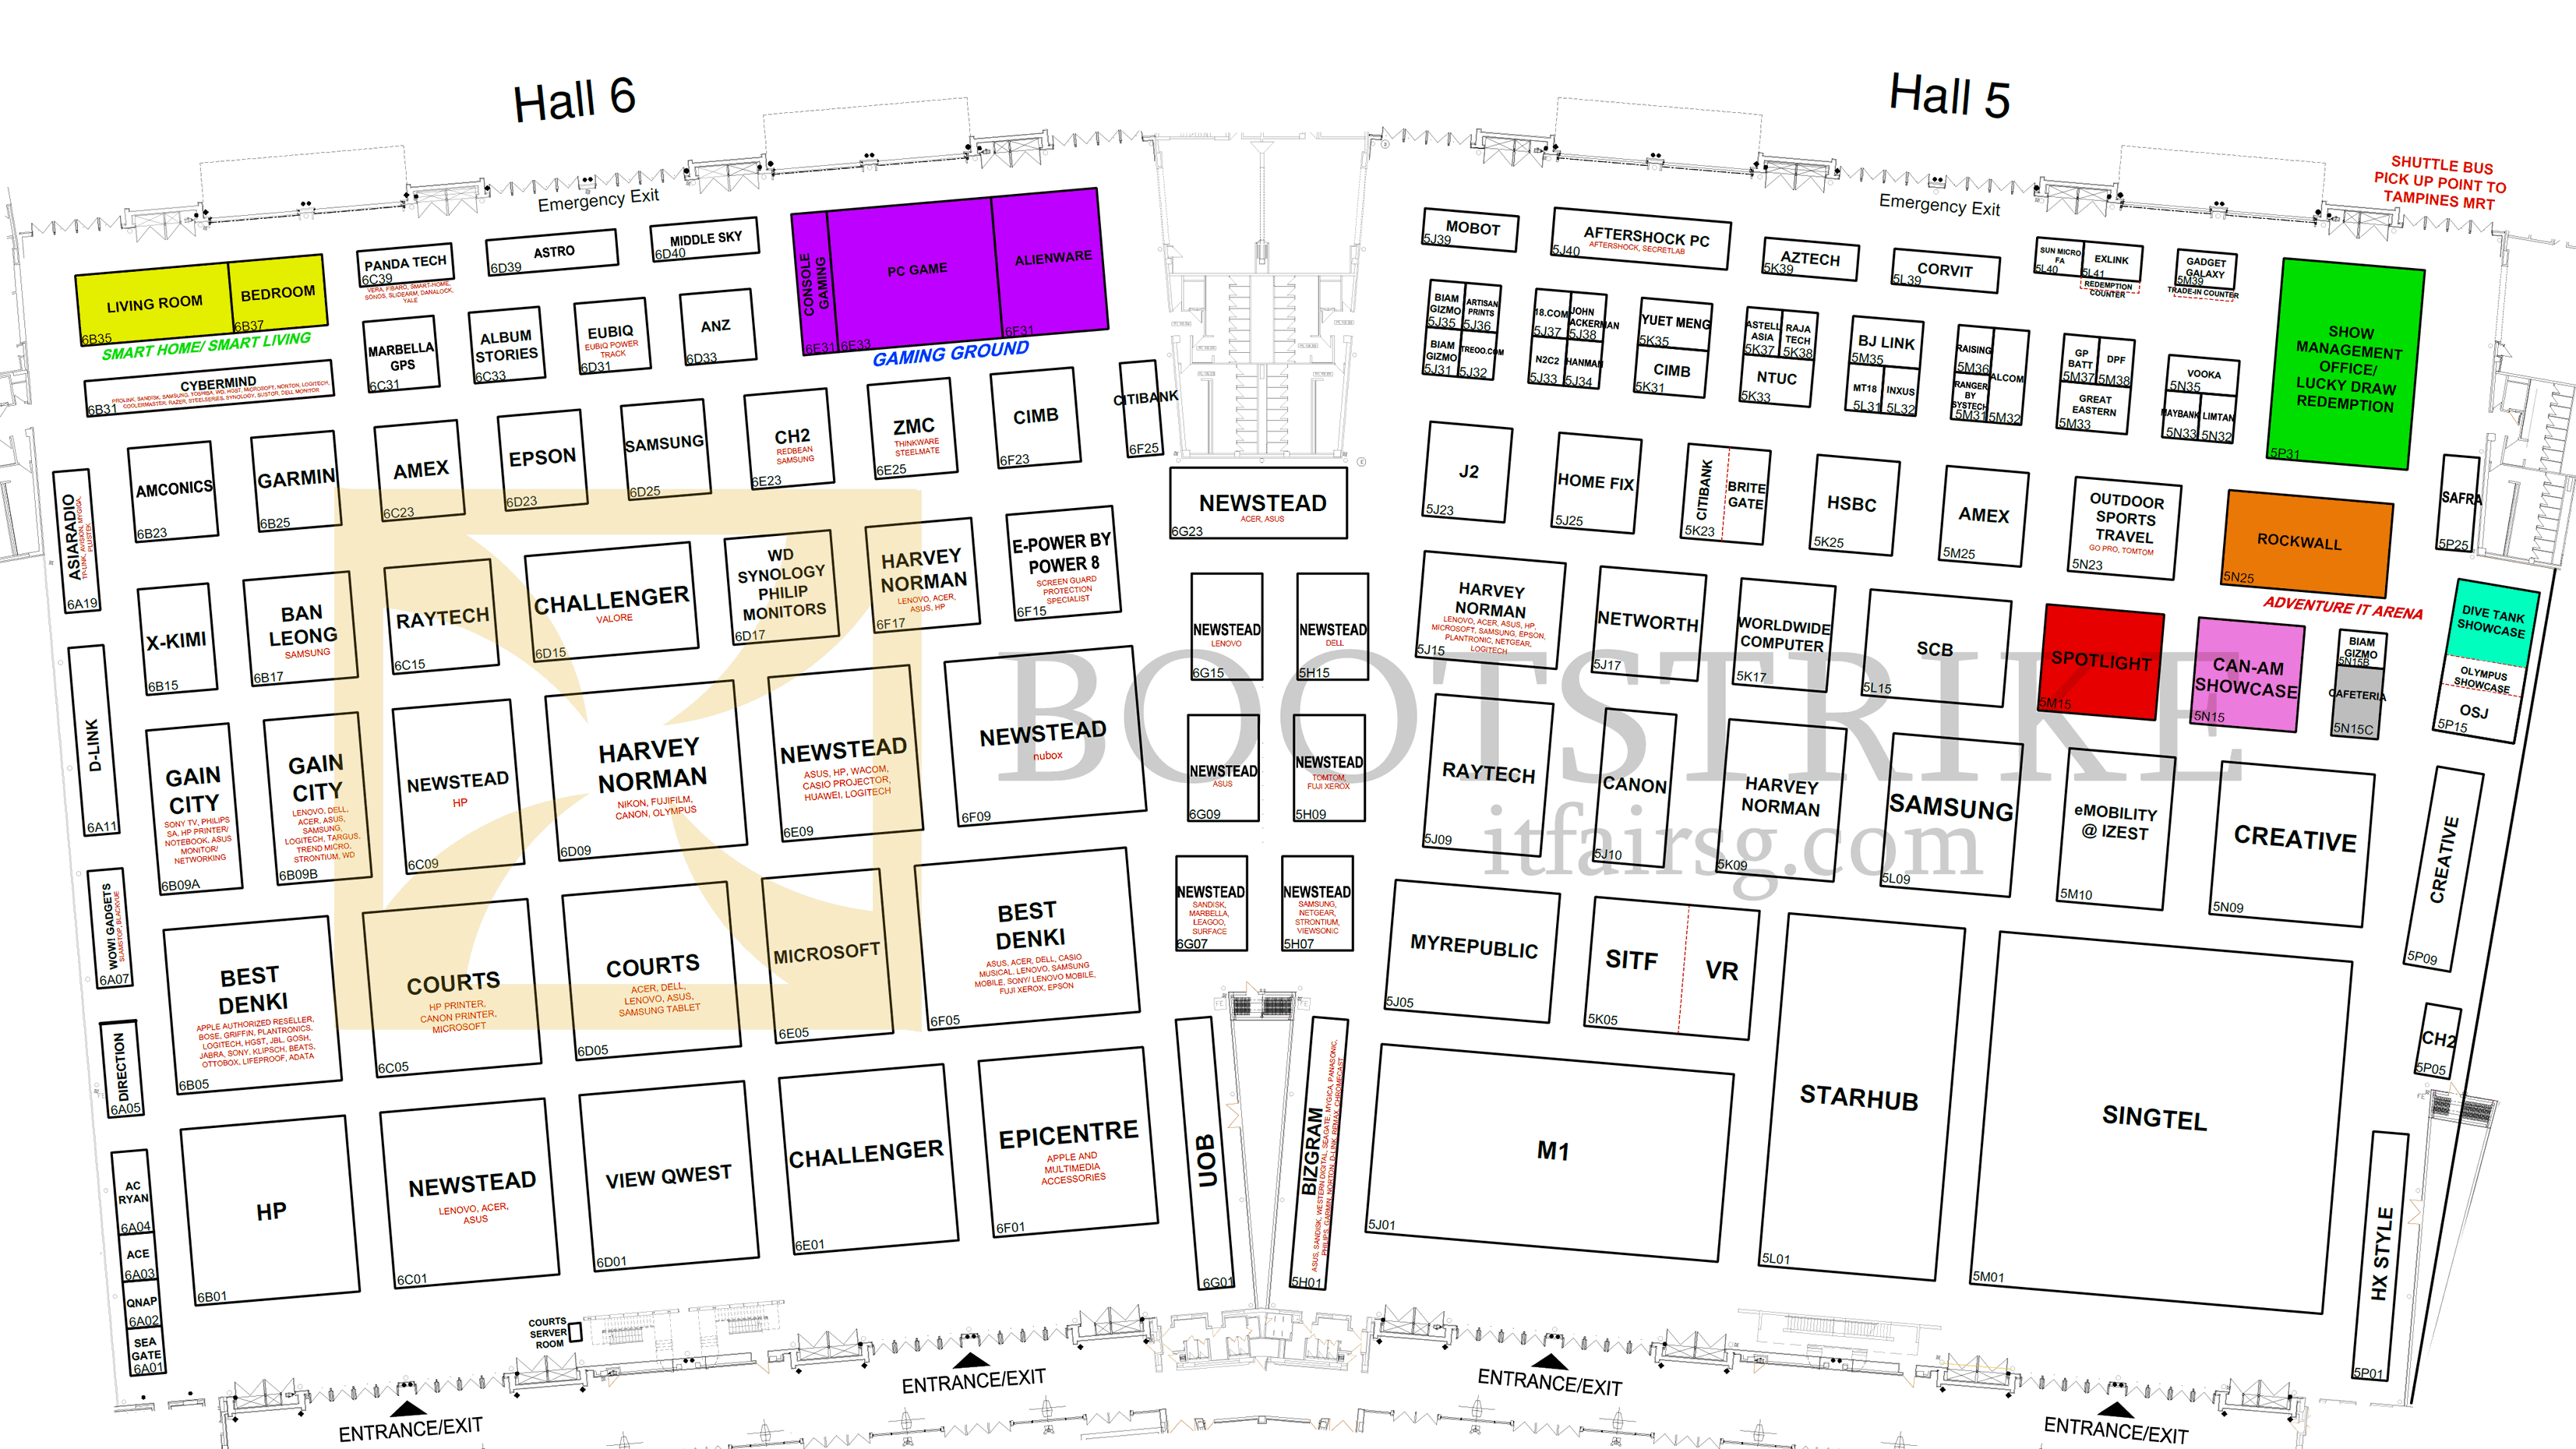 SITEX 2015 price list image brochure of Floor Plan Map Full Hall 5, Hall 6, Singapore Expo SITEX 2015